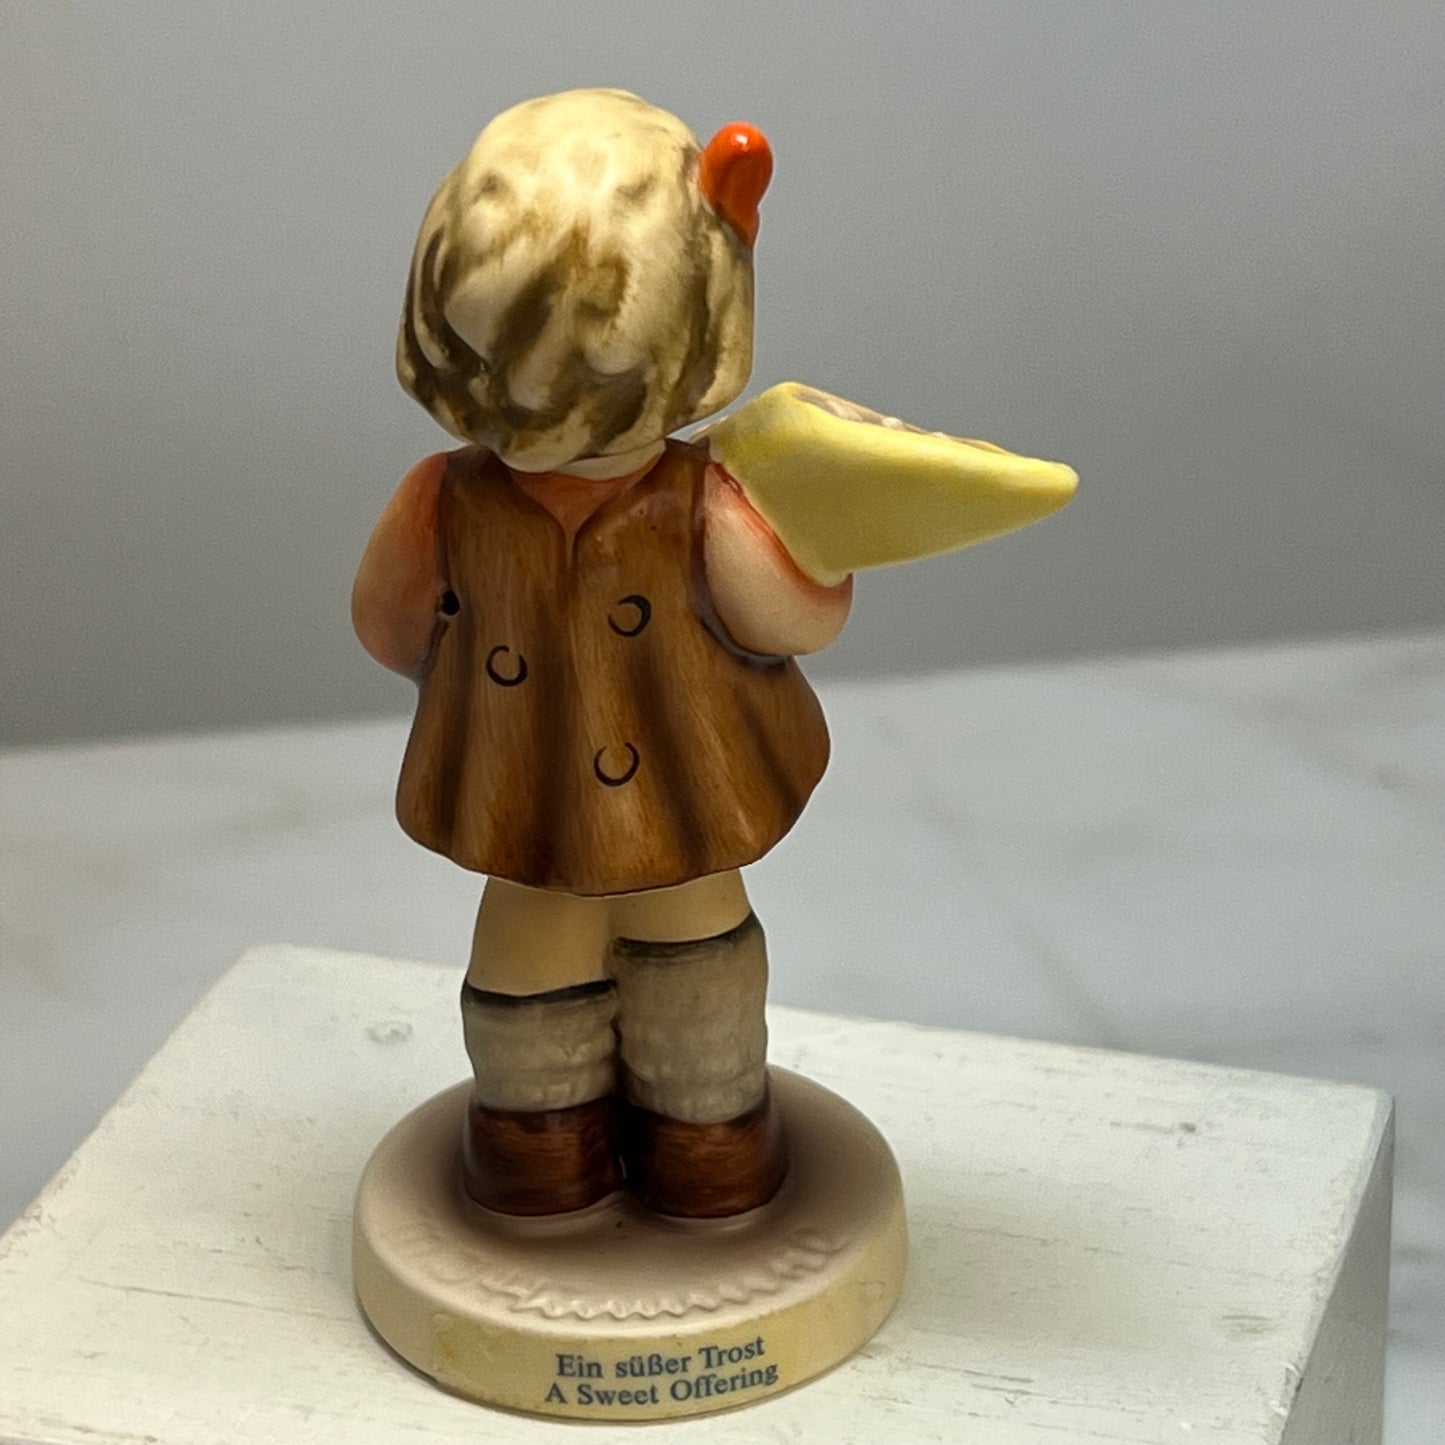 1993 Hummel "A Sweet Offering" HUM 549  M. I. Hummel Club Figurine